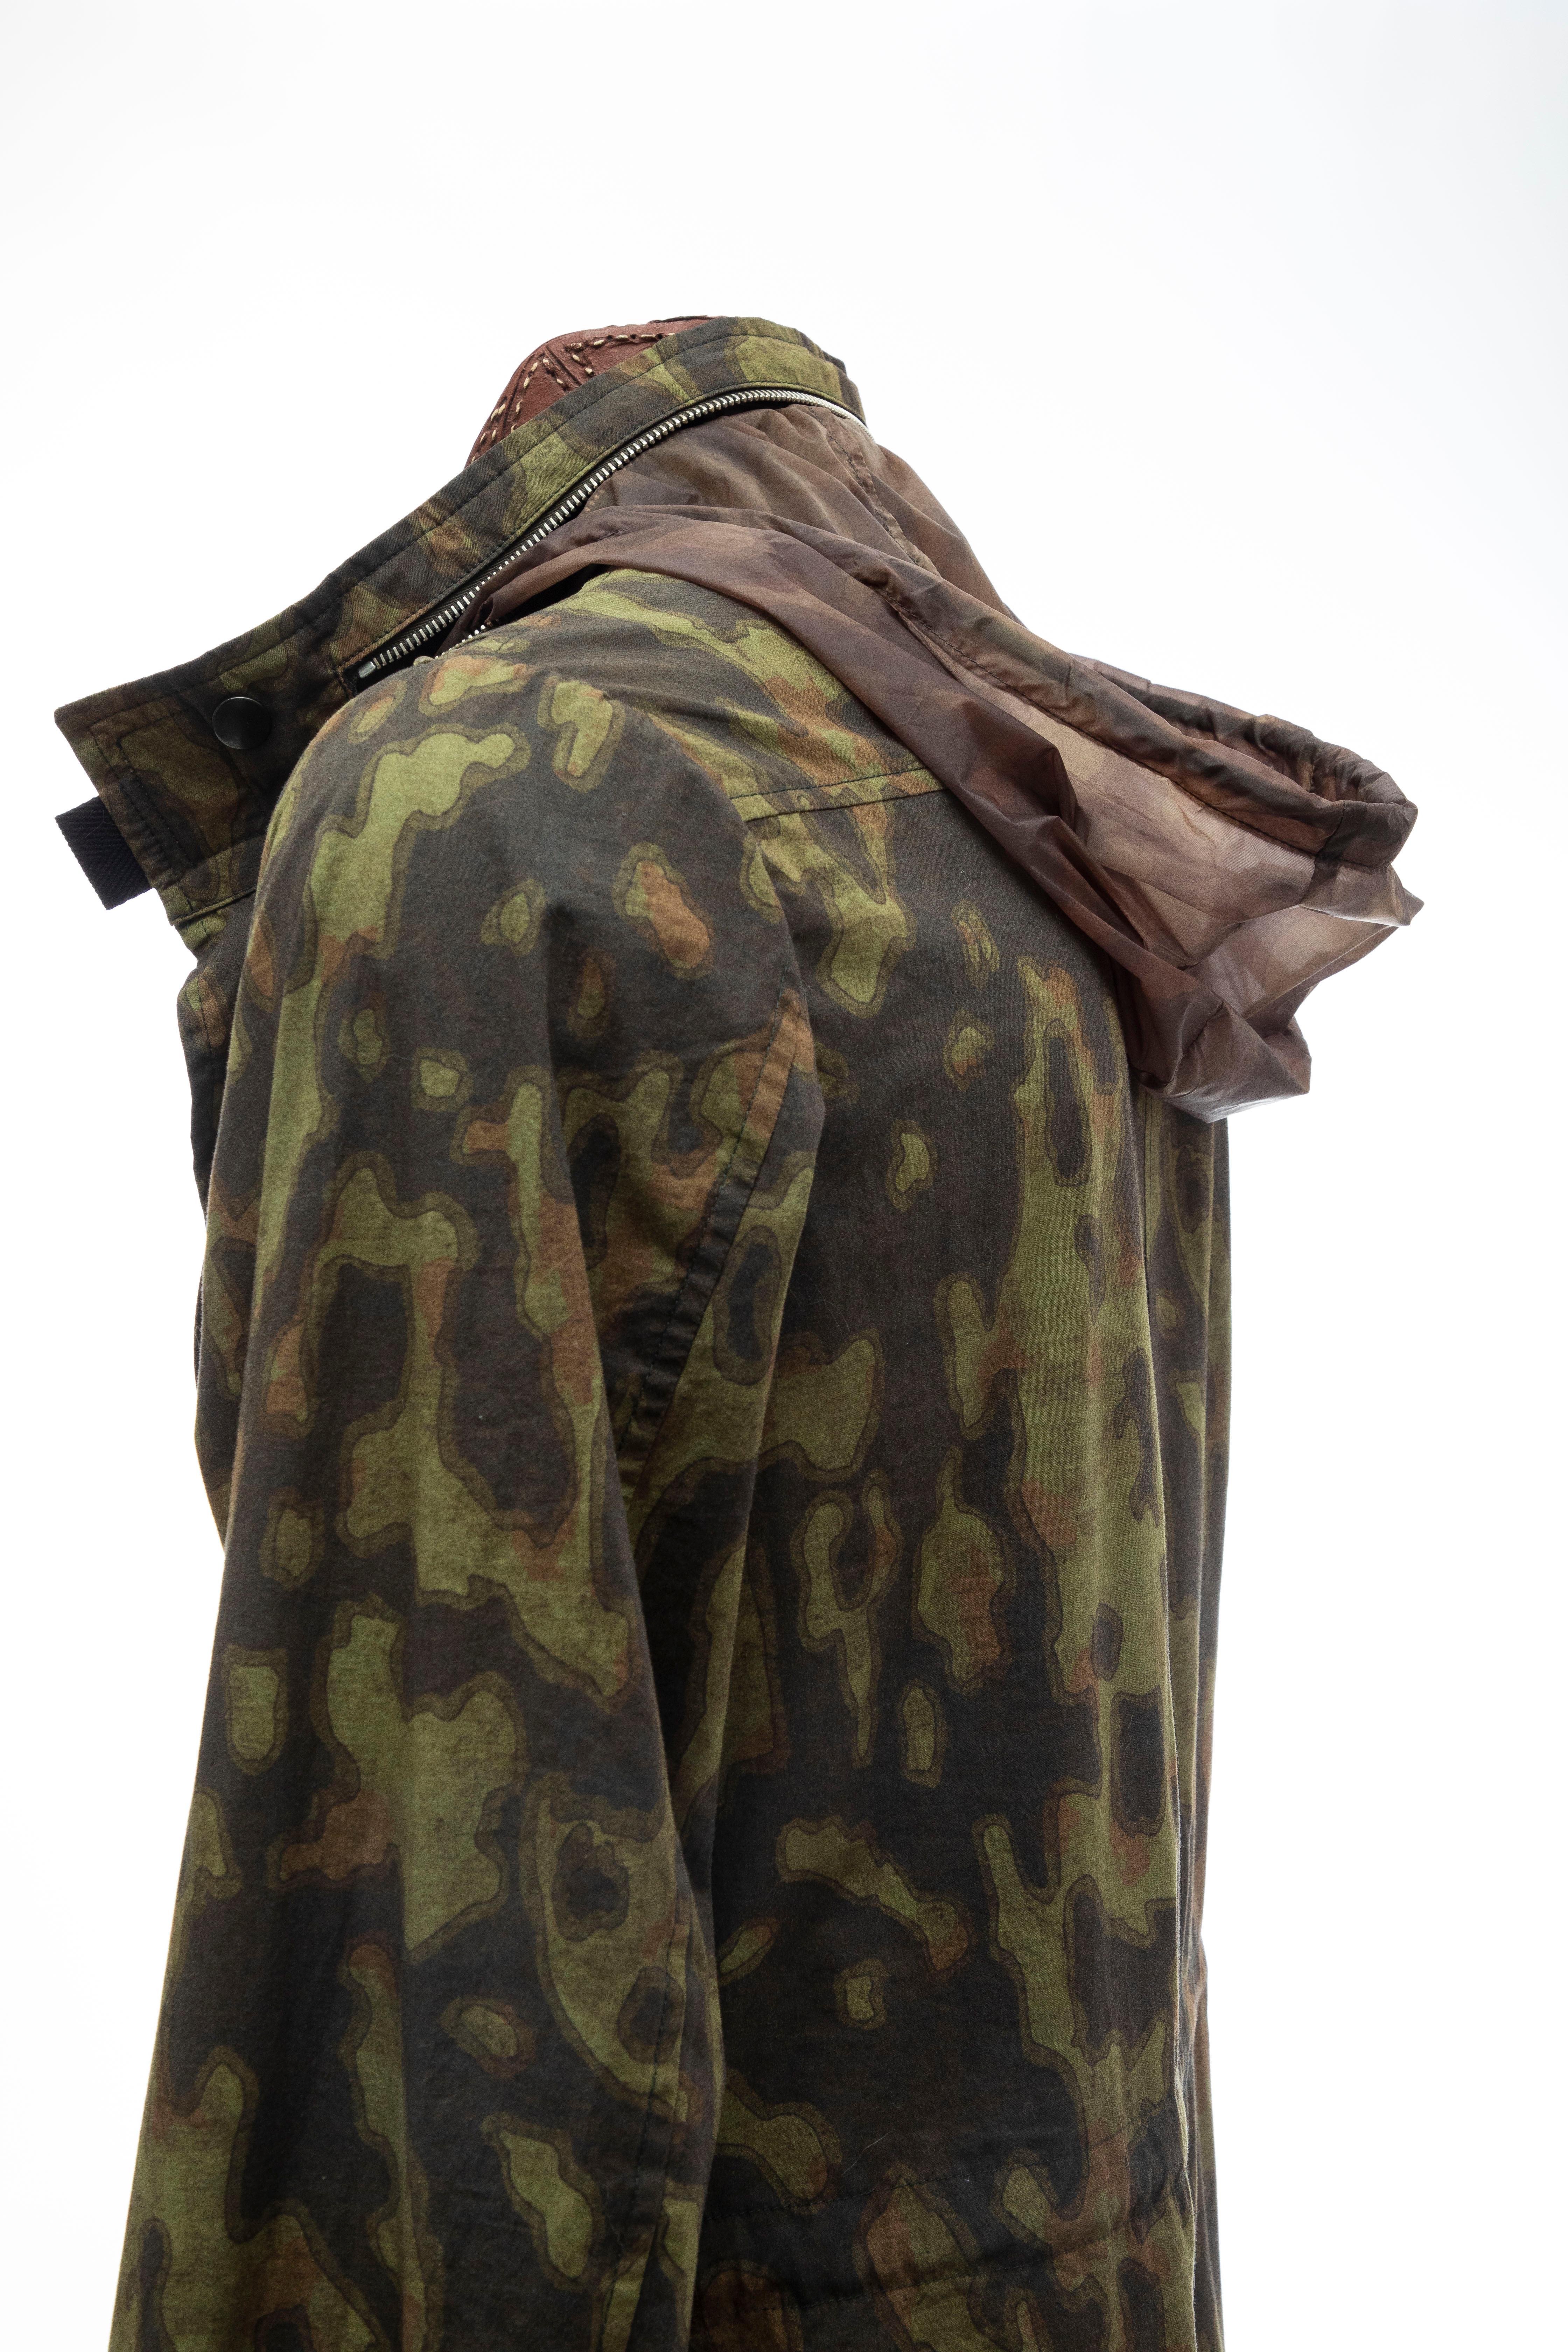 Dries Van Noten Men's Cotton Camouflage Jacket, Spring 2013 For Sale 8